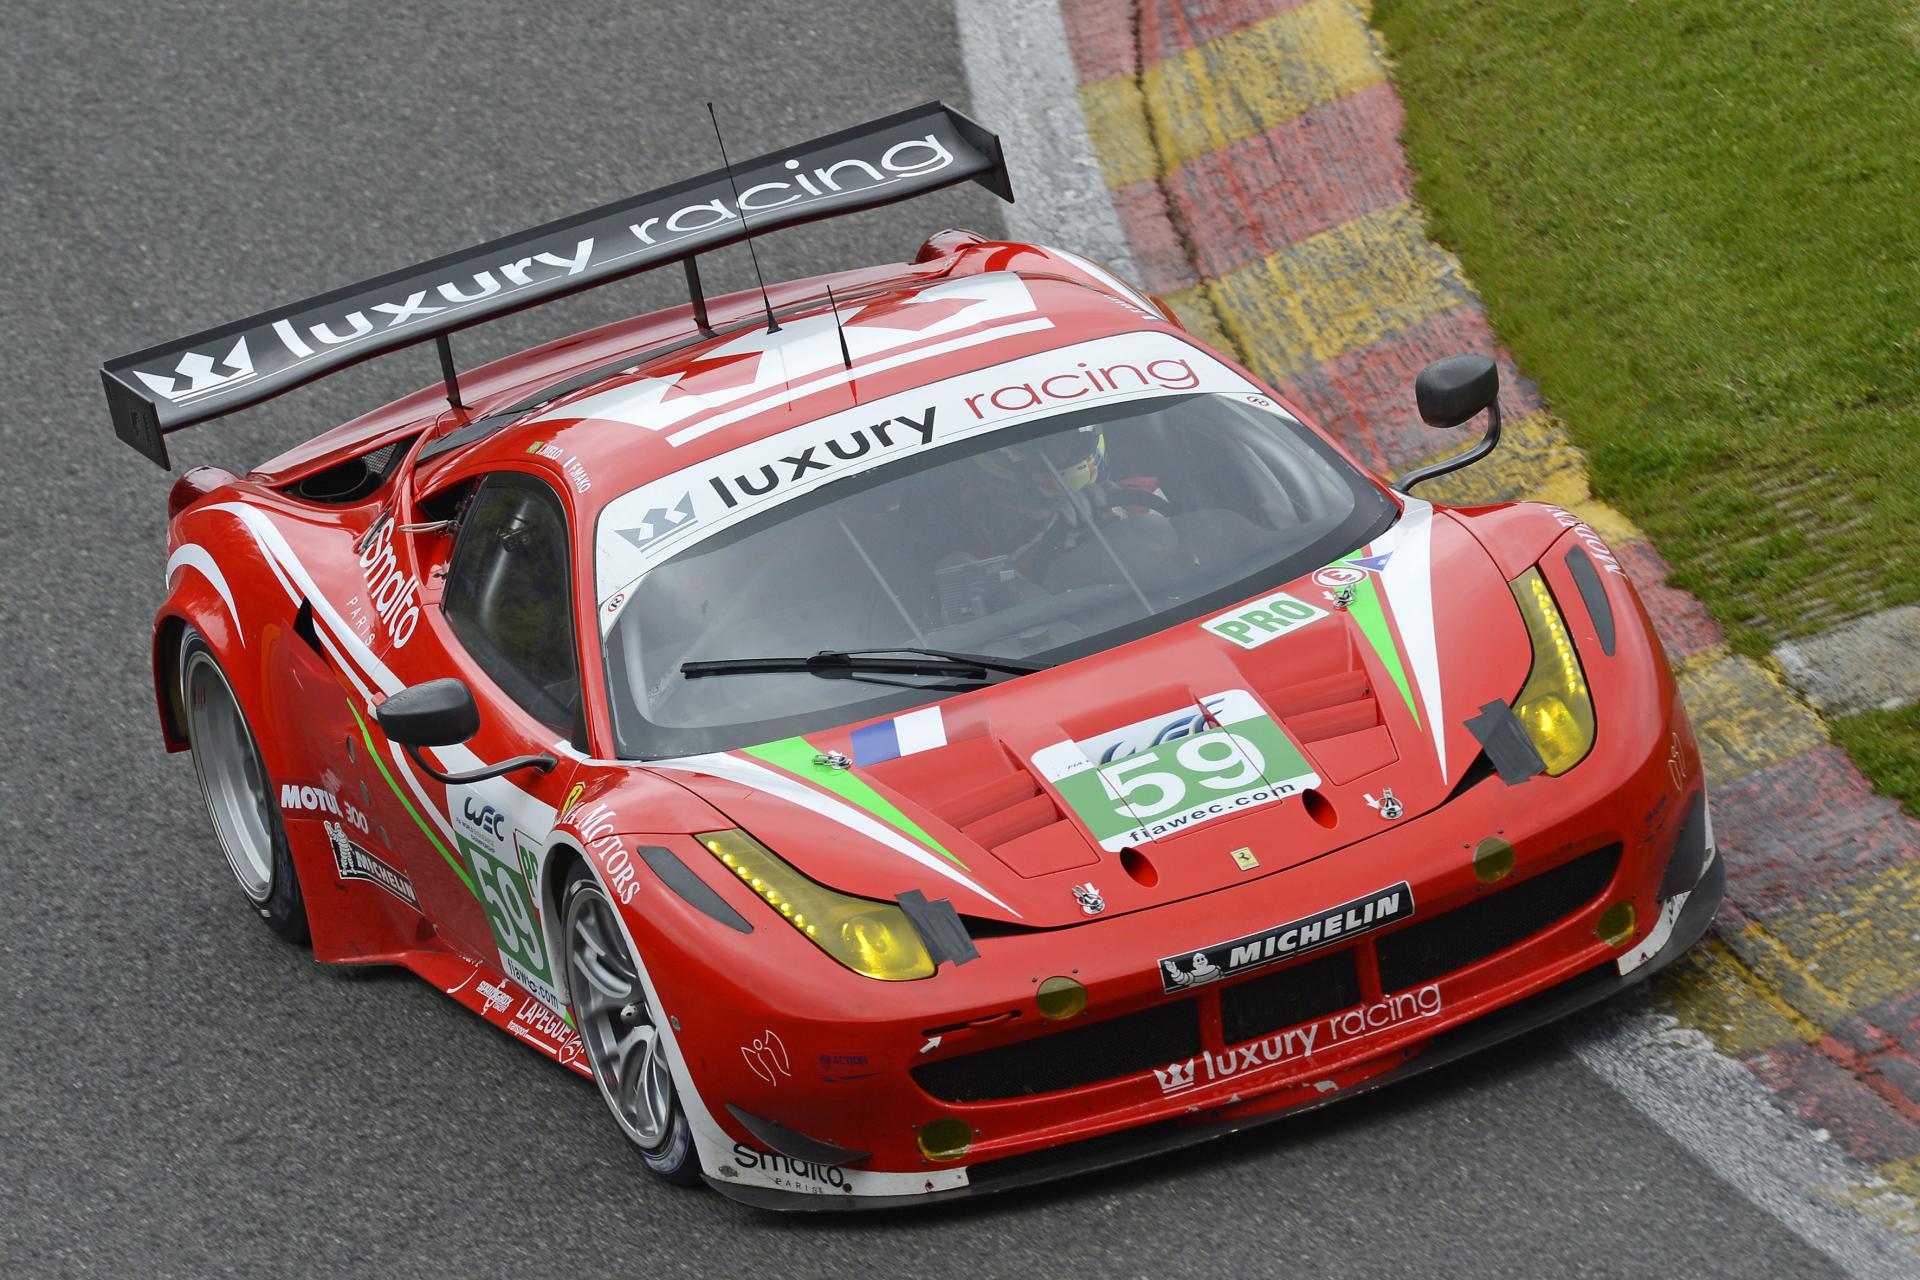 Ferrari gt 2